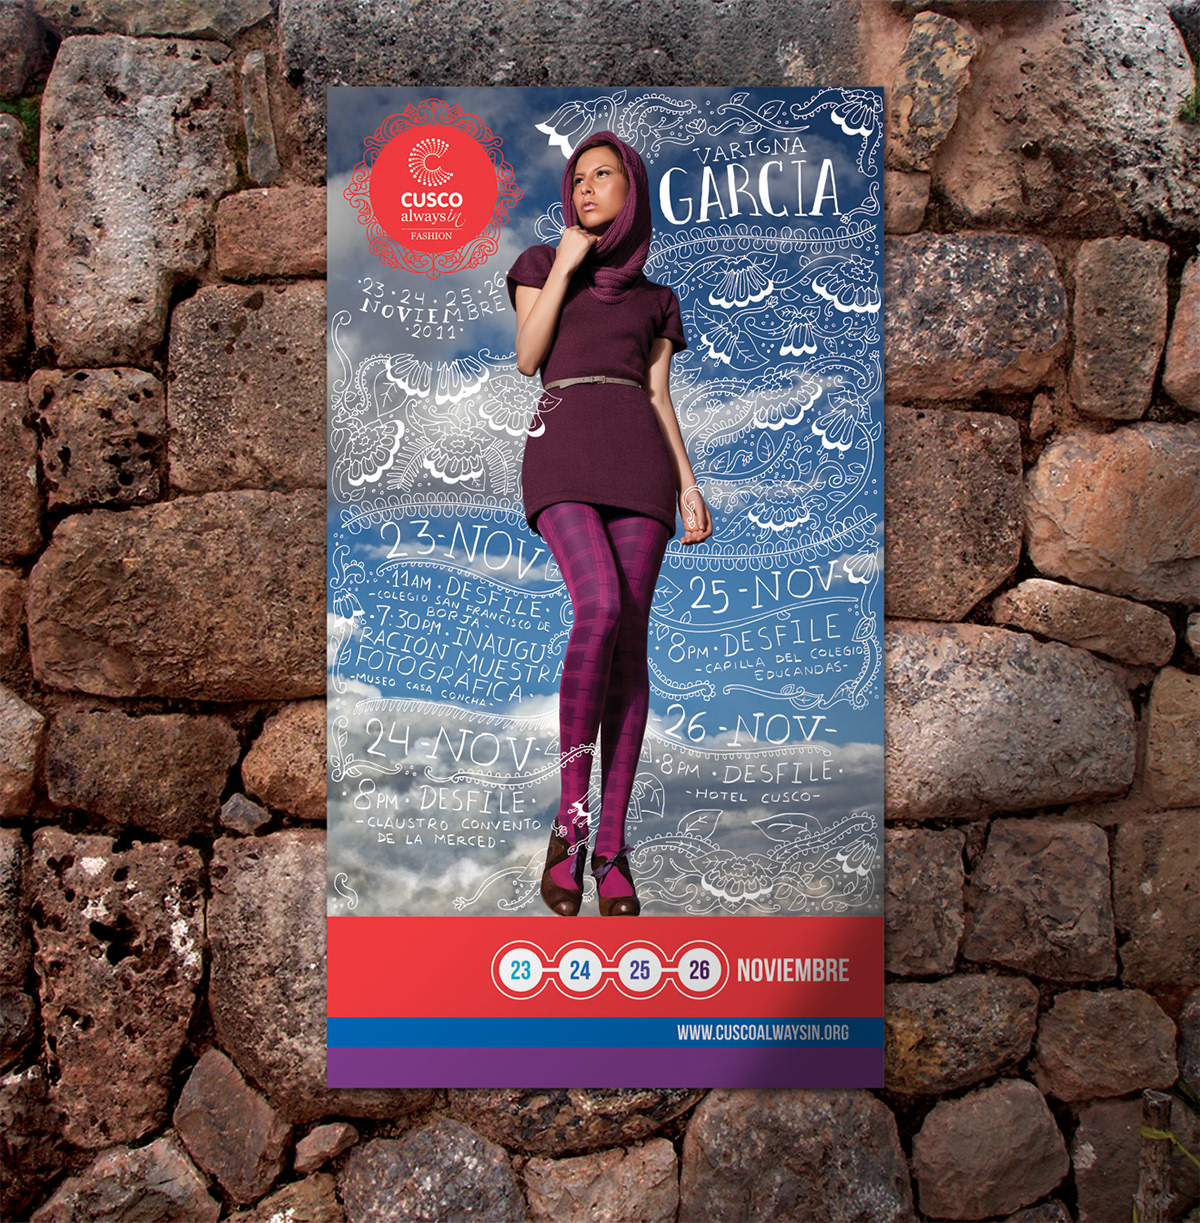 cusco Cuzco lima peru cusco always in venero li fajardo moda poster afiche